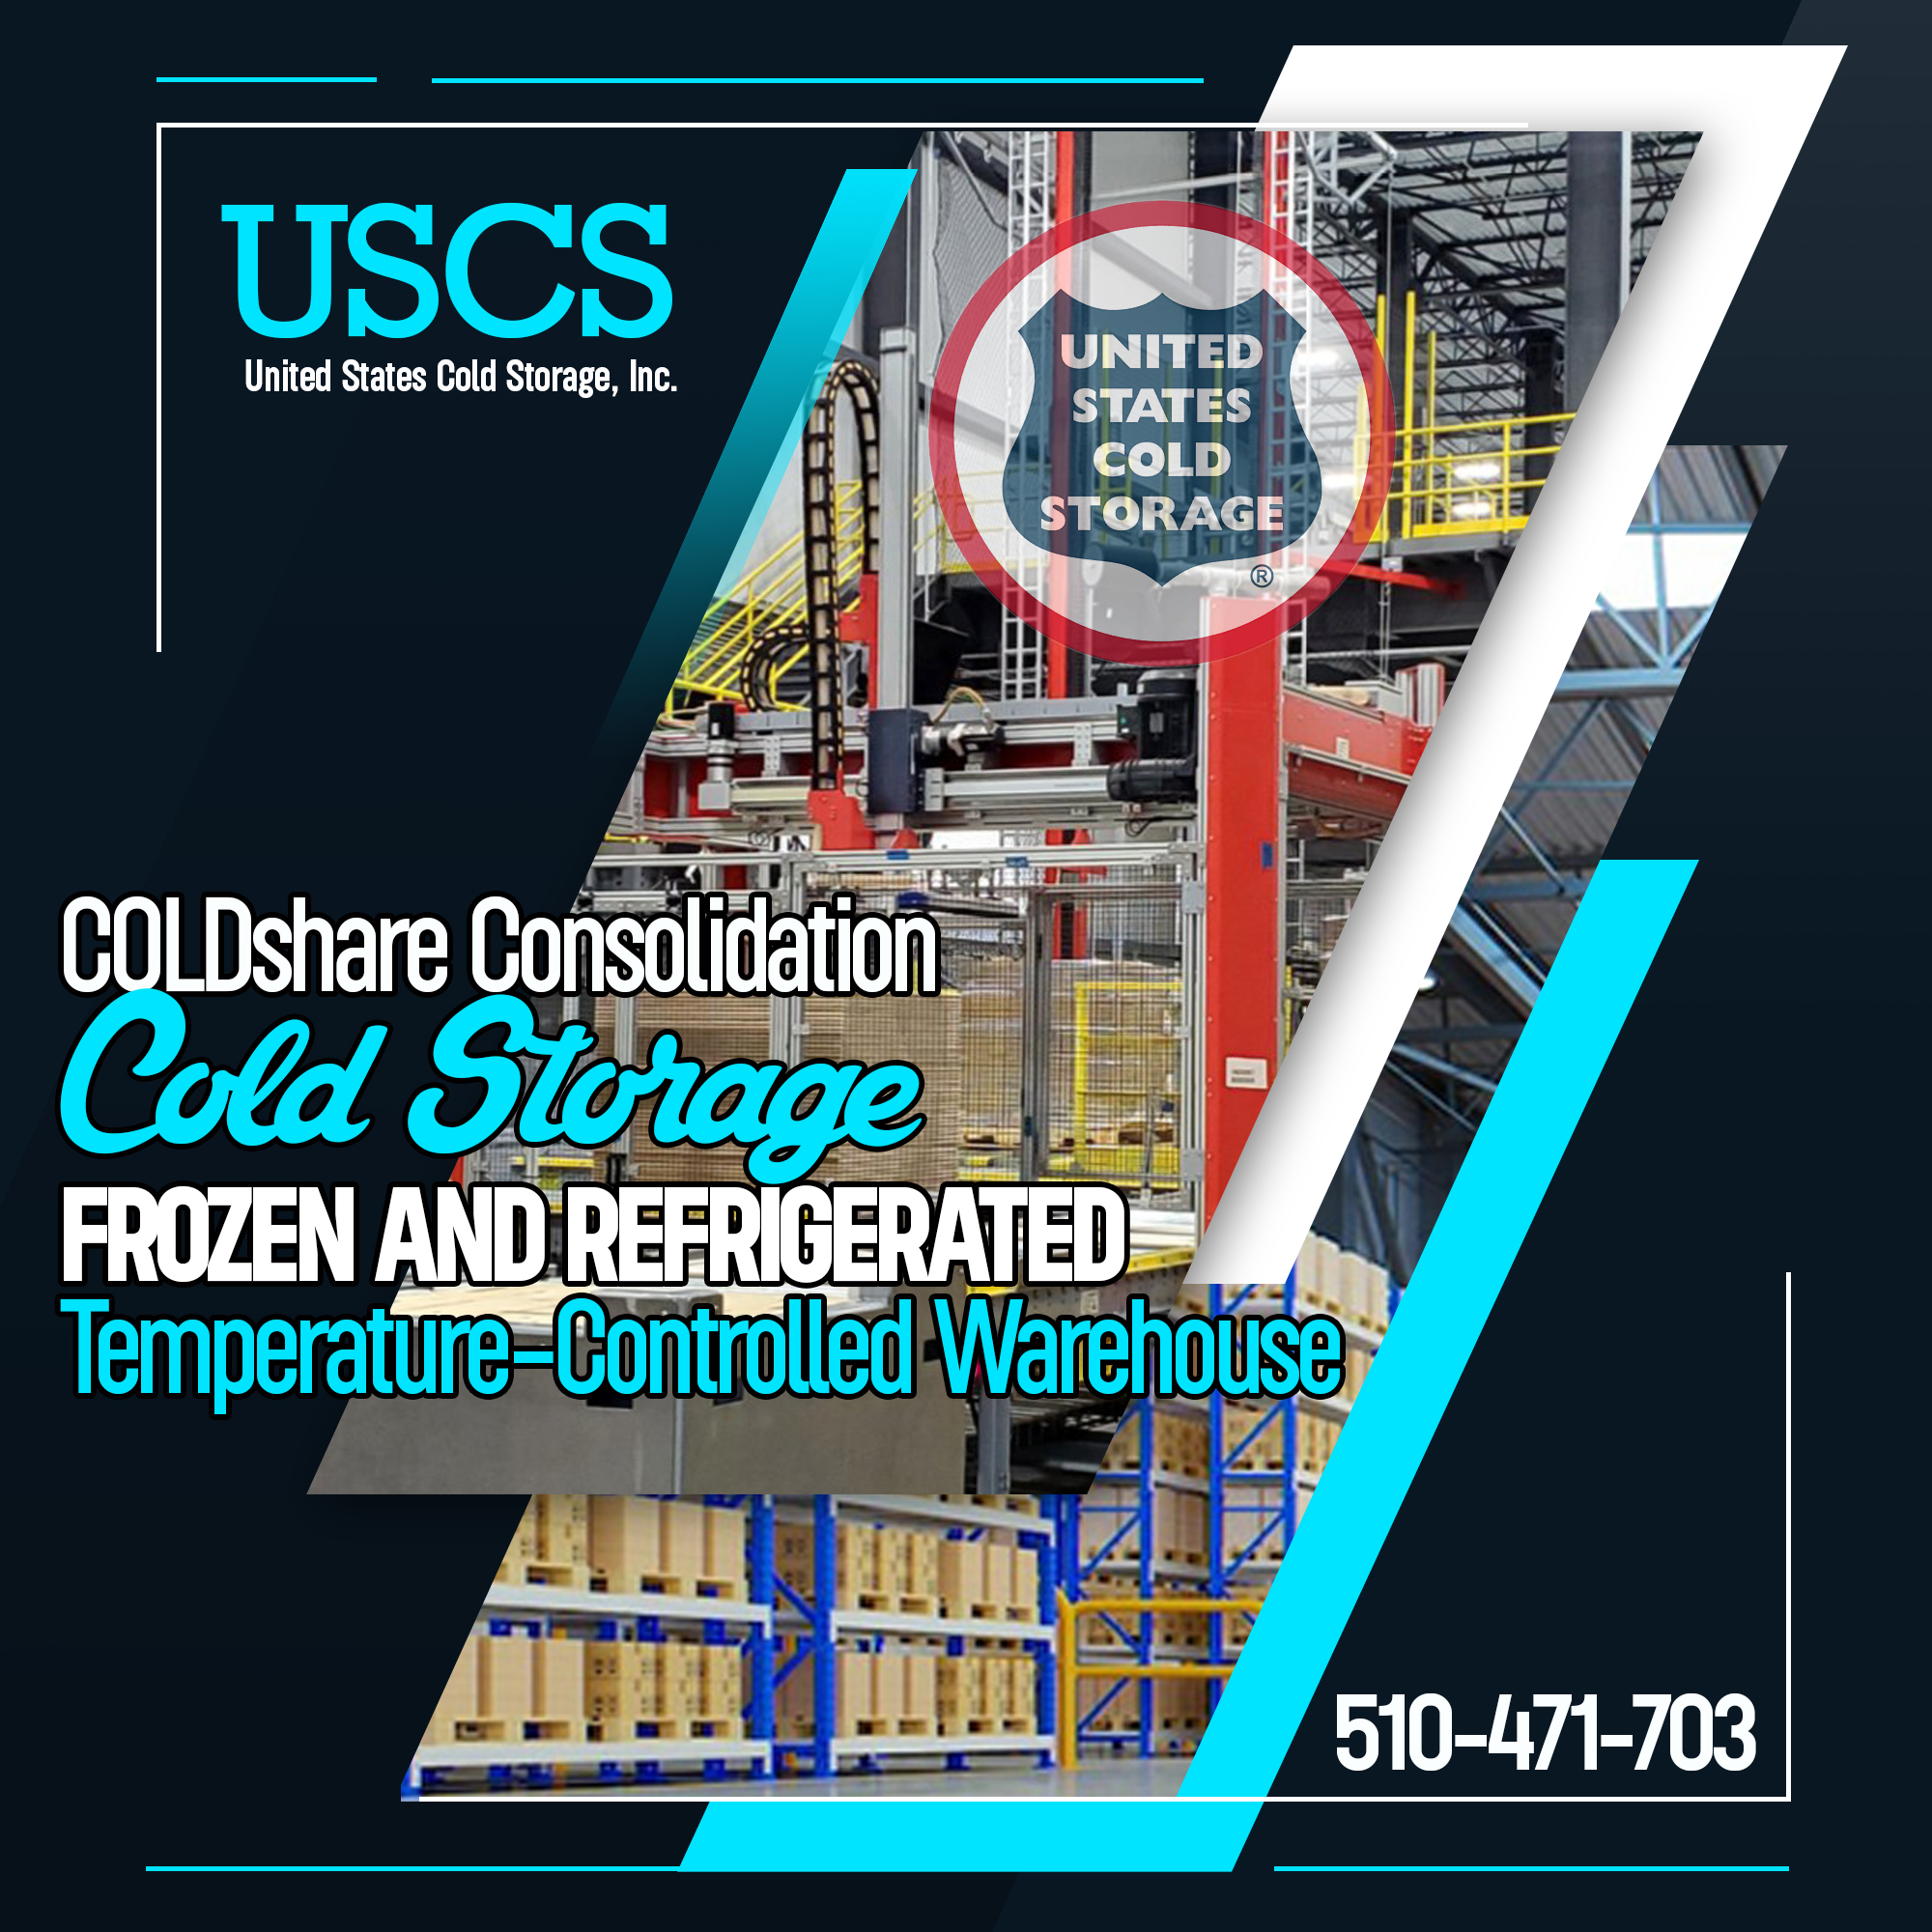 USCS – United States Cold Storage, Inc.